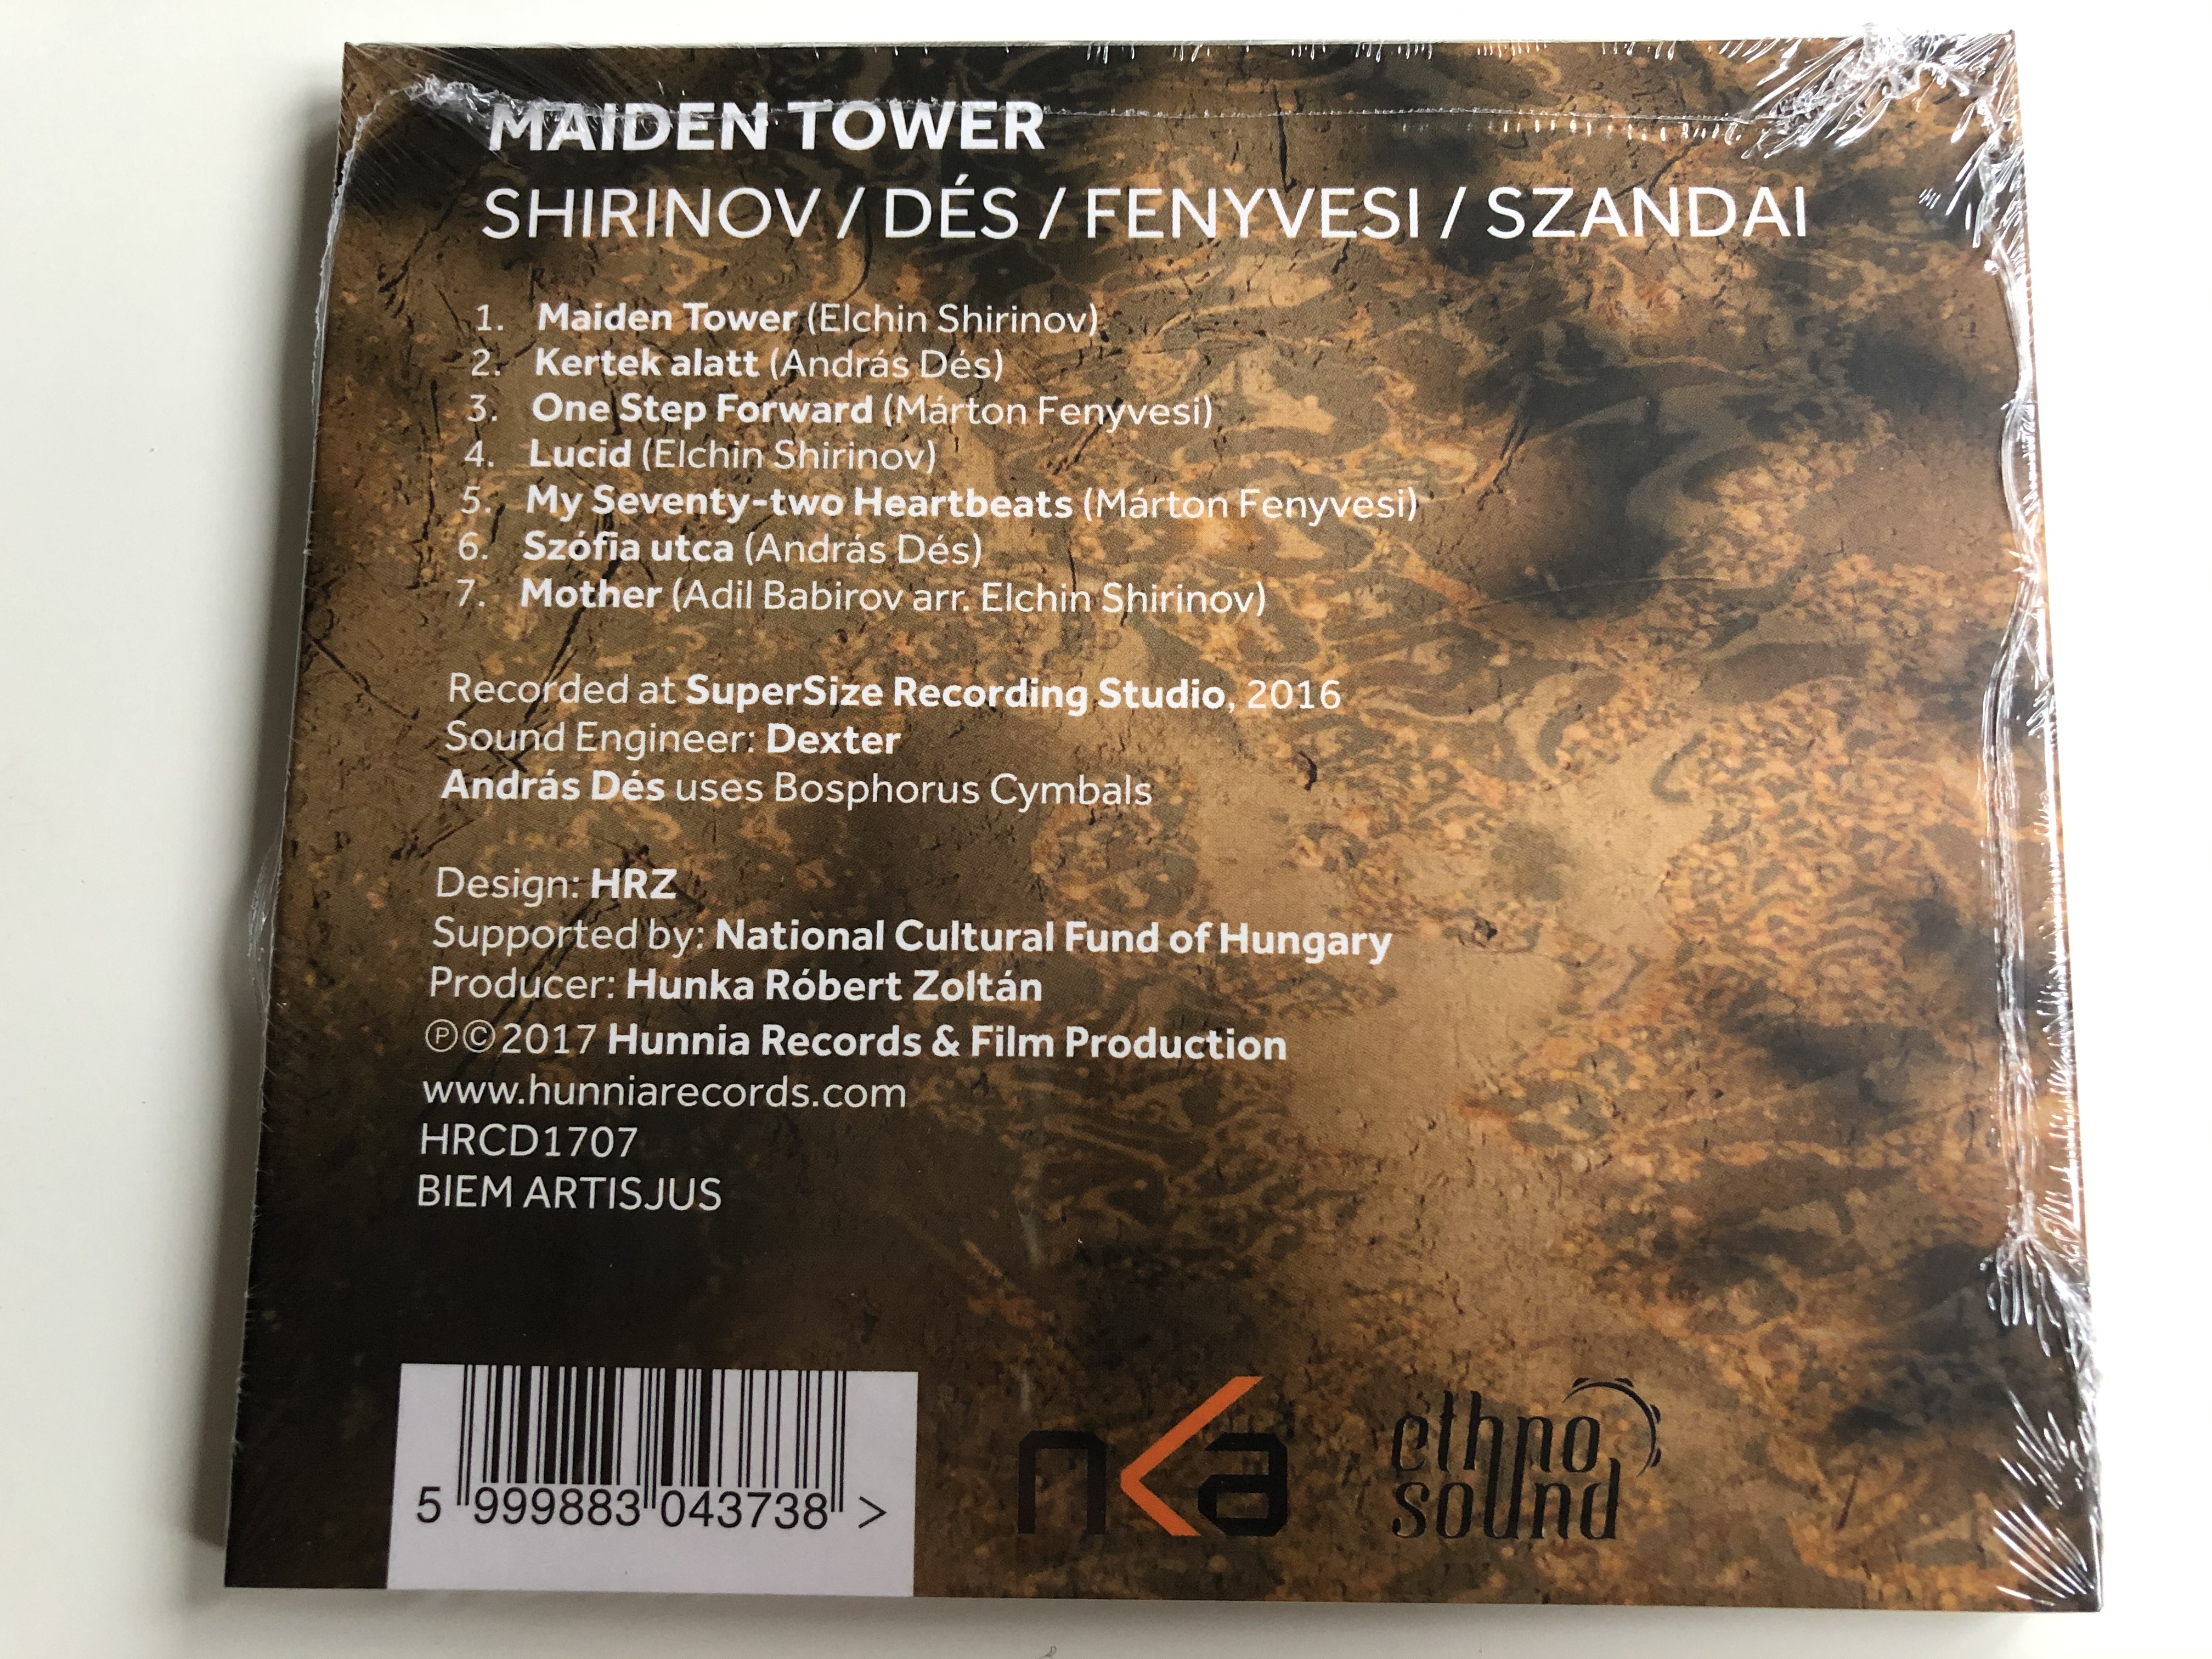 maiden-tower-shirinov-des-fenyvesi-szandai-hunnia-records-film-production-audio-cd-2017-hrcd1707-2-.jpg